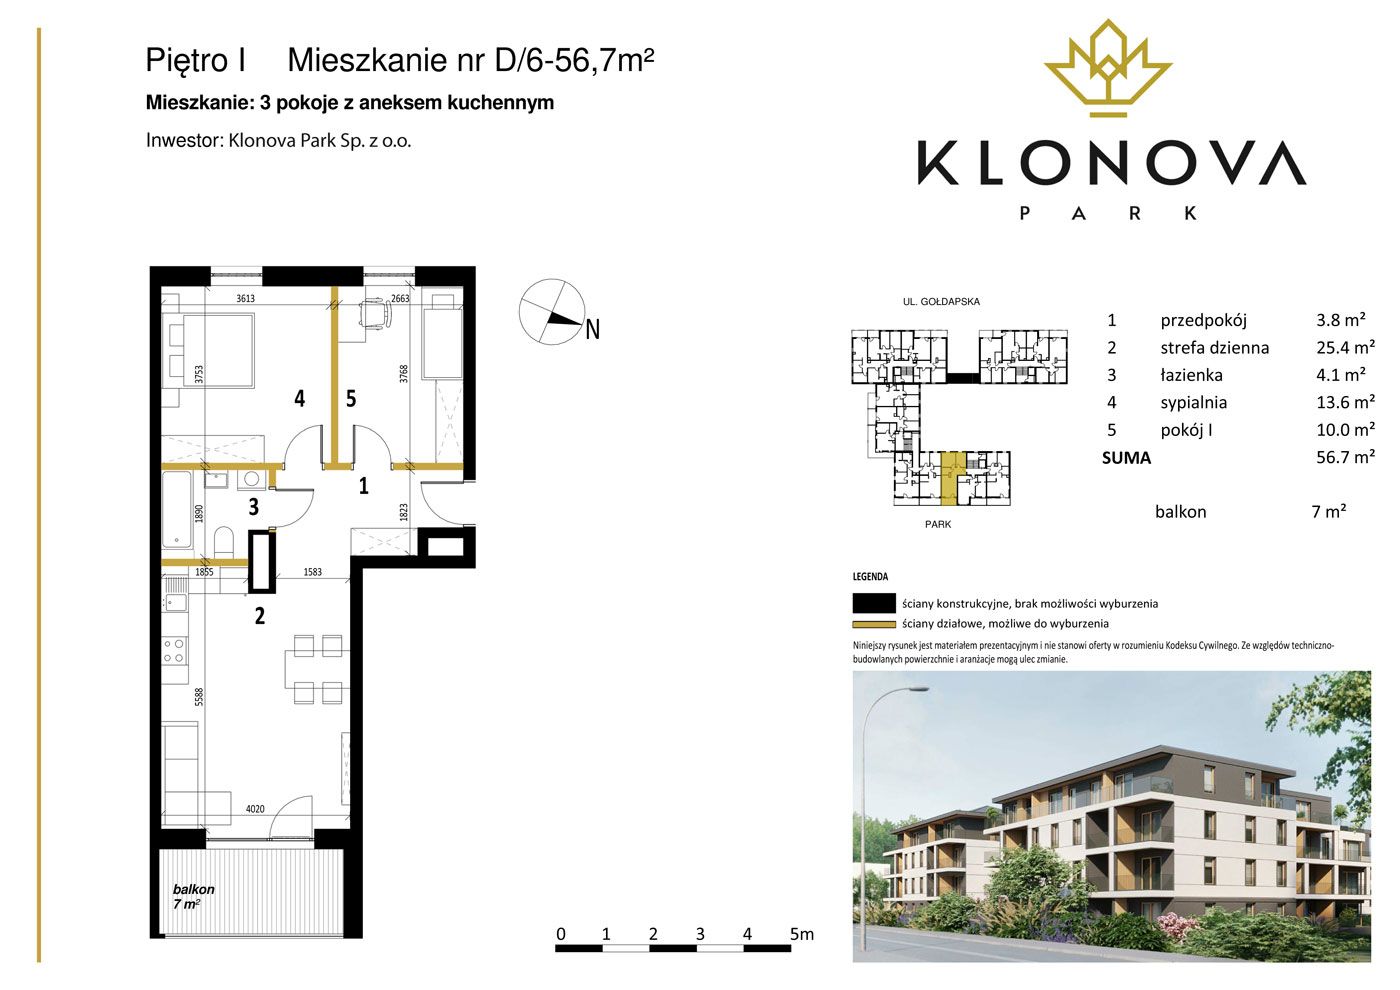 Apartamenty Klonova Park - Plan mieszkania D/6